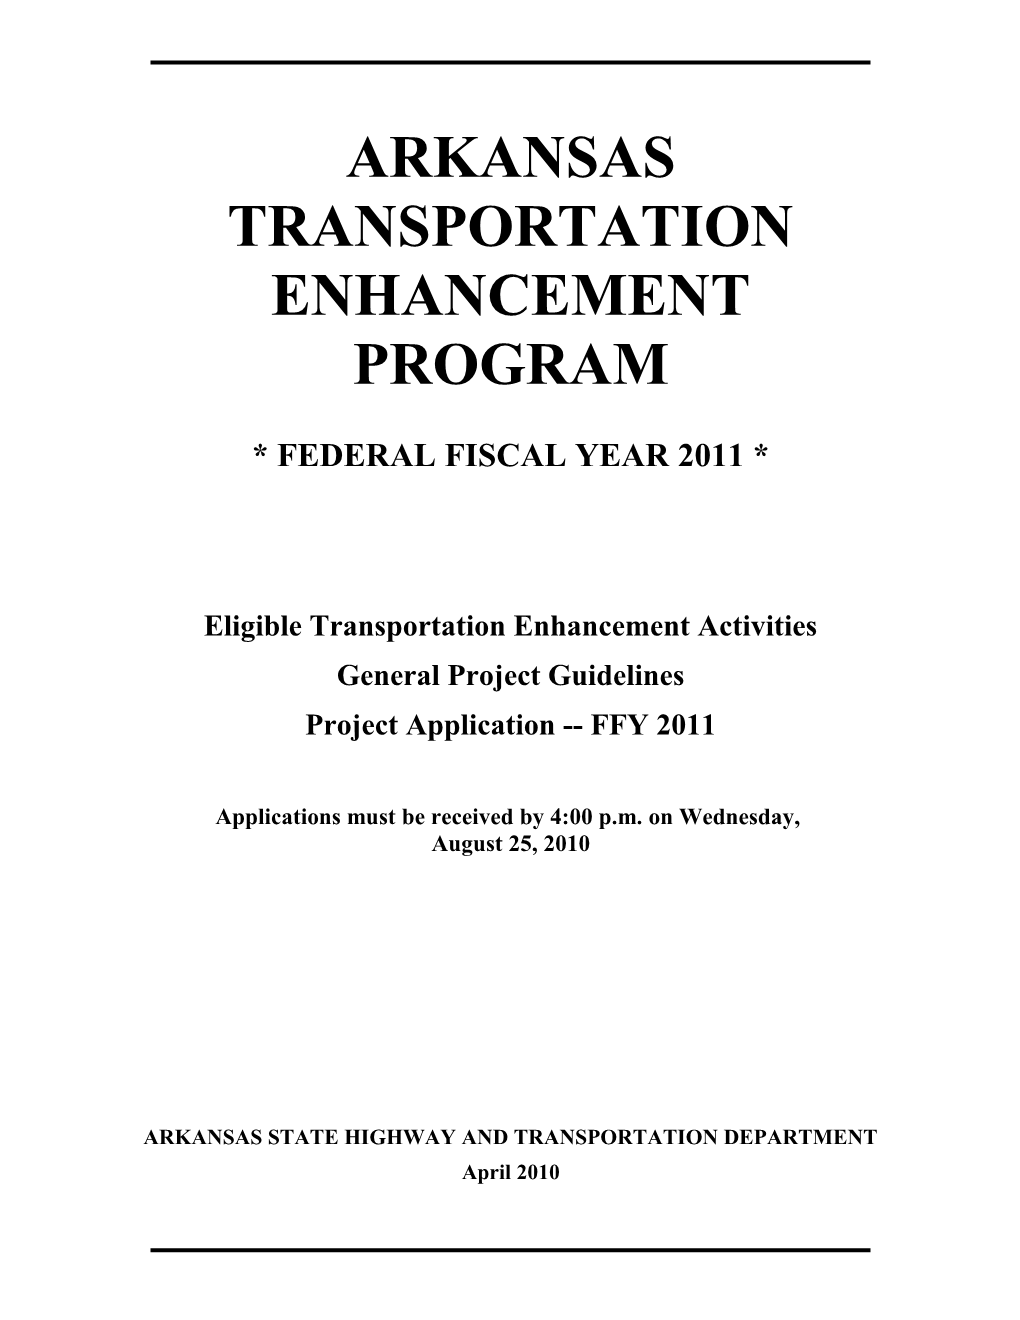 Eligible Transportation Enhancement Activities